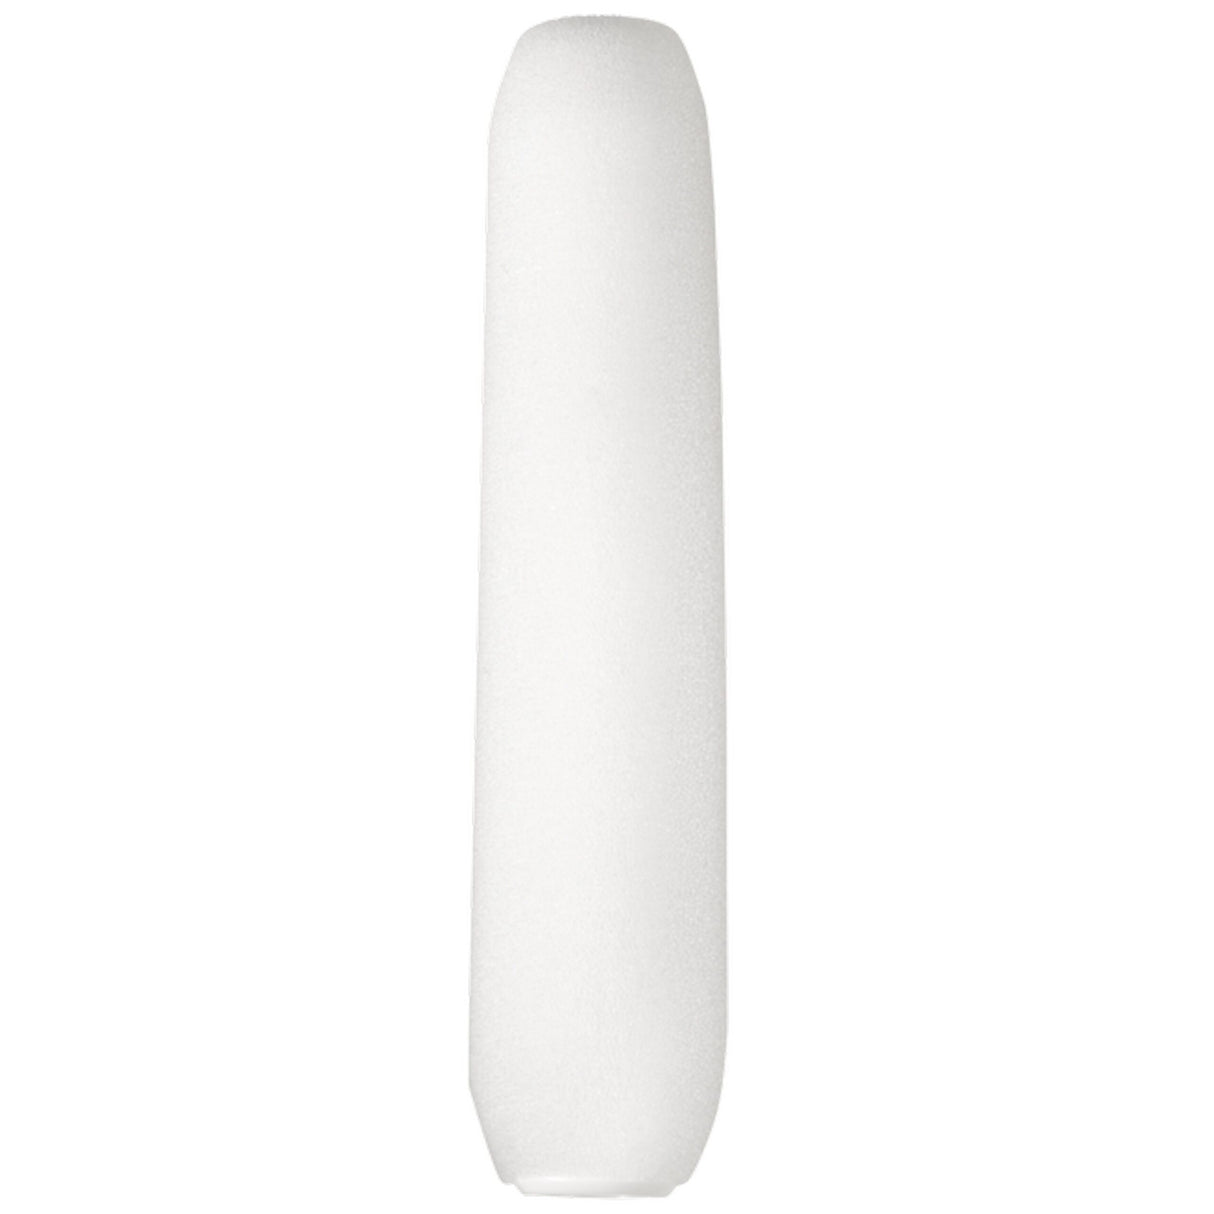 Shure A189WWS High-Performance Foam Windscreen for R189, White